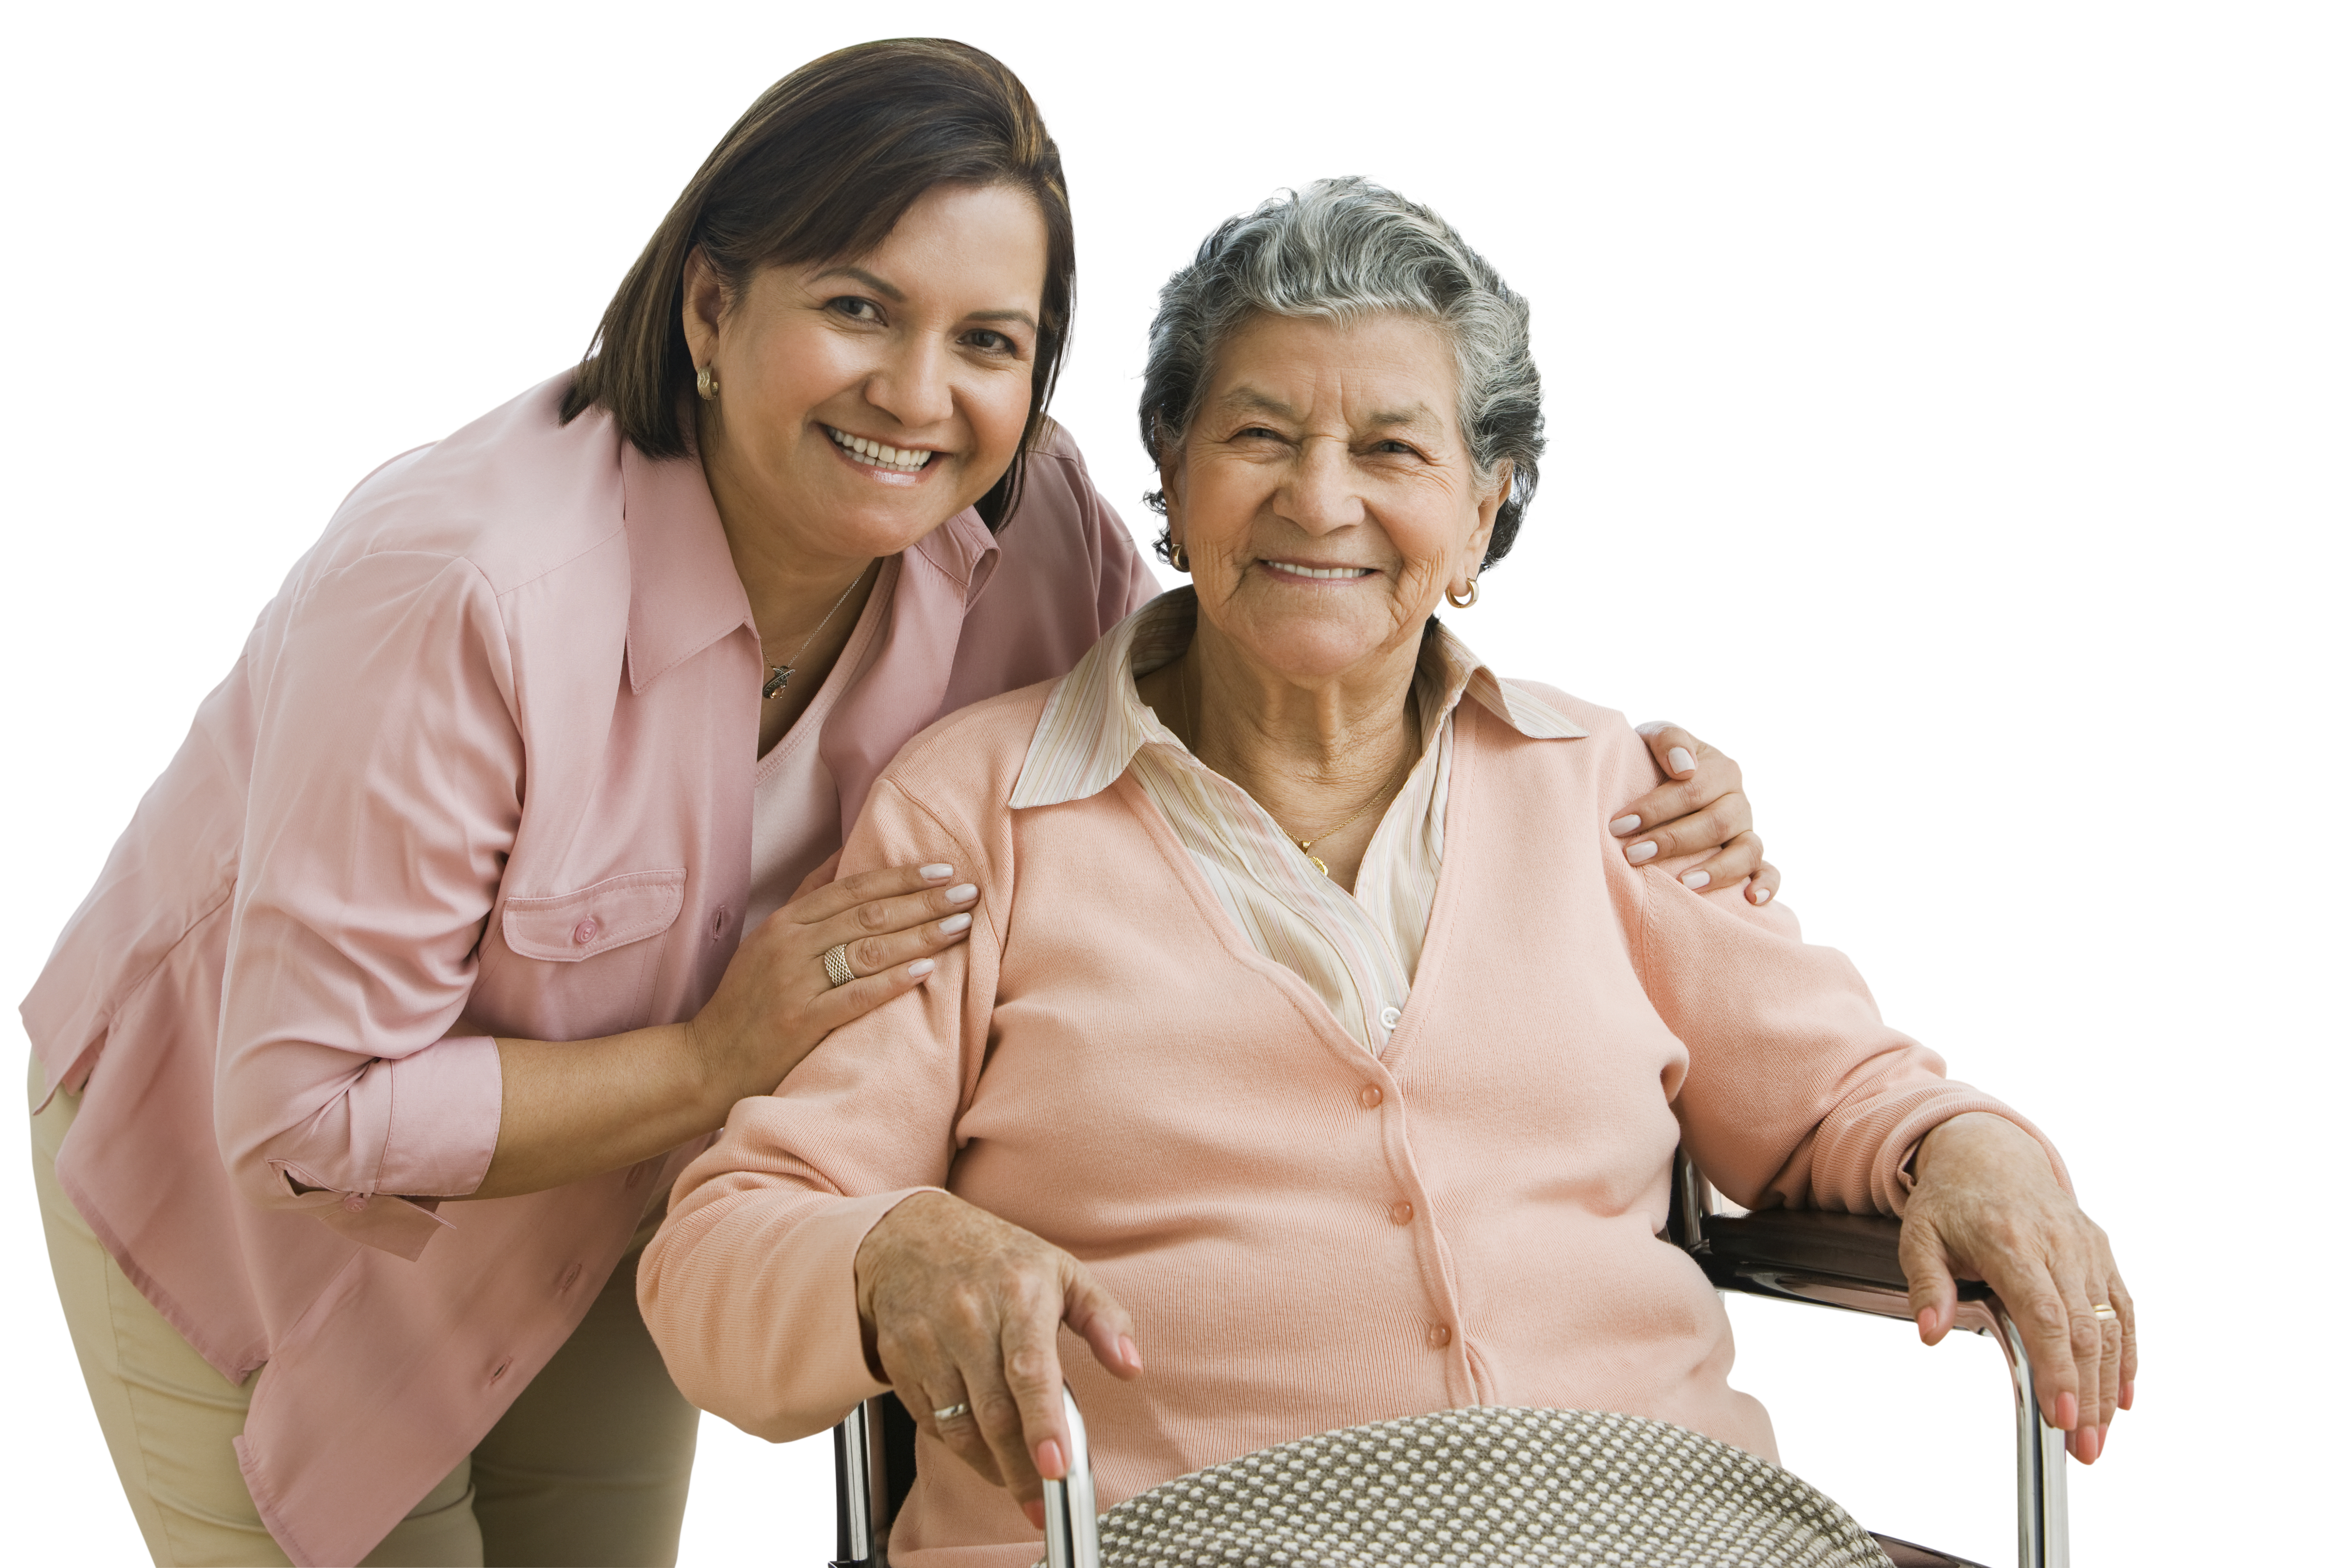 Woman caregiving for elderly woman